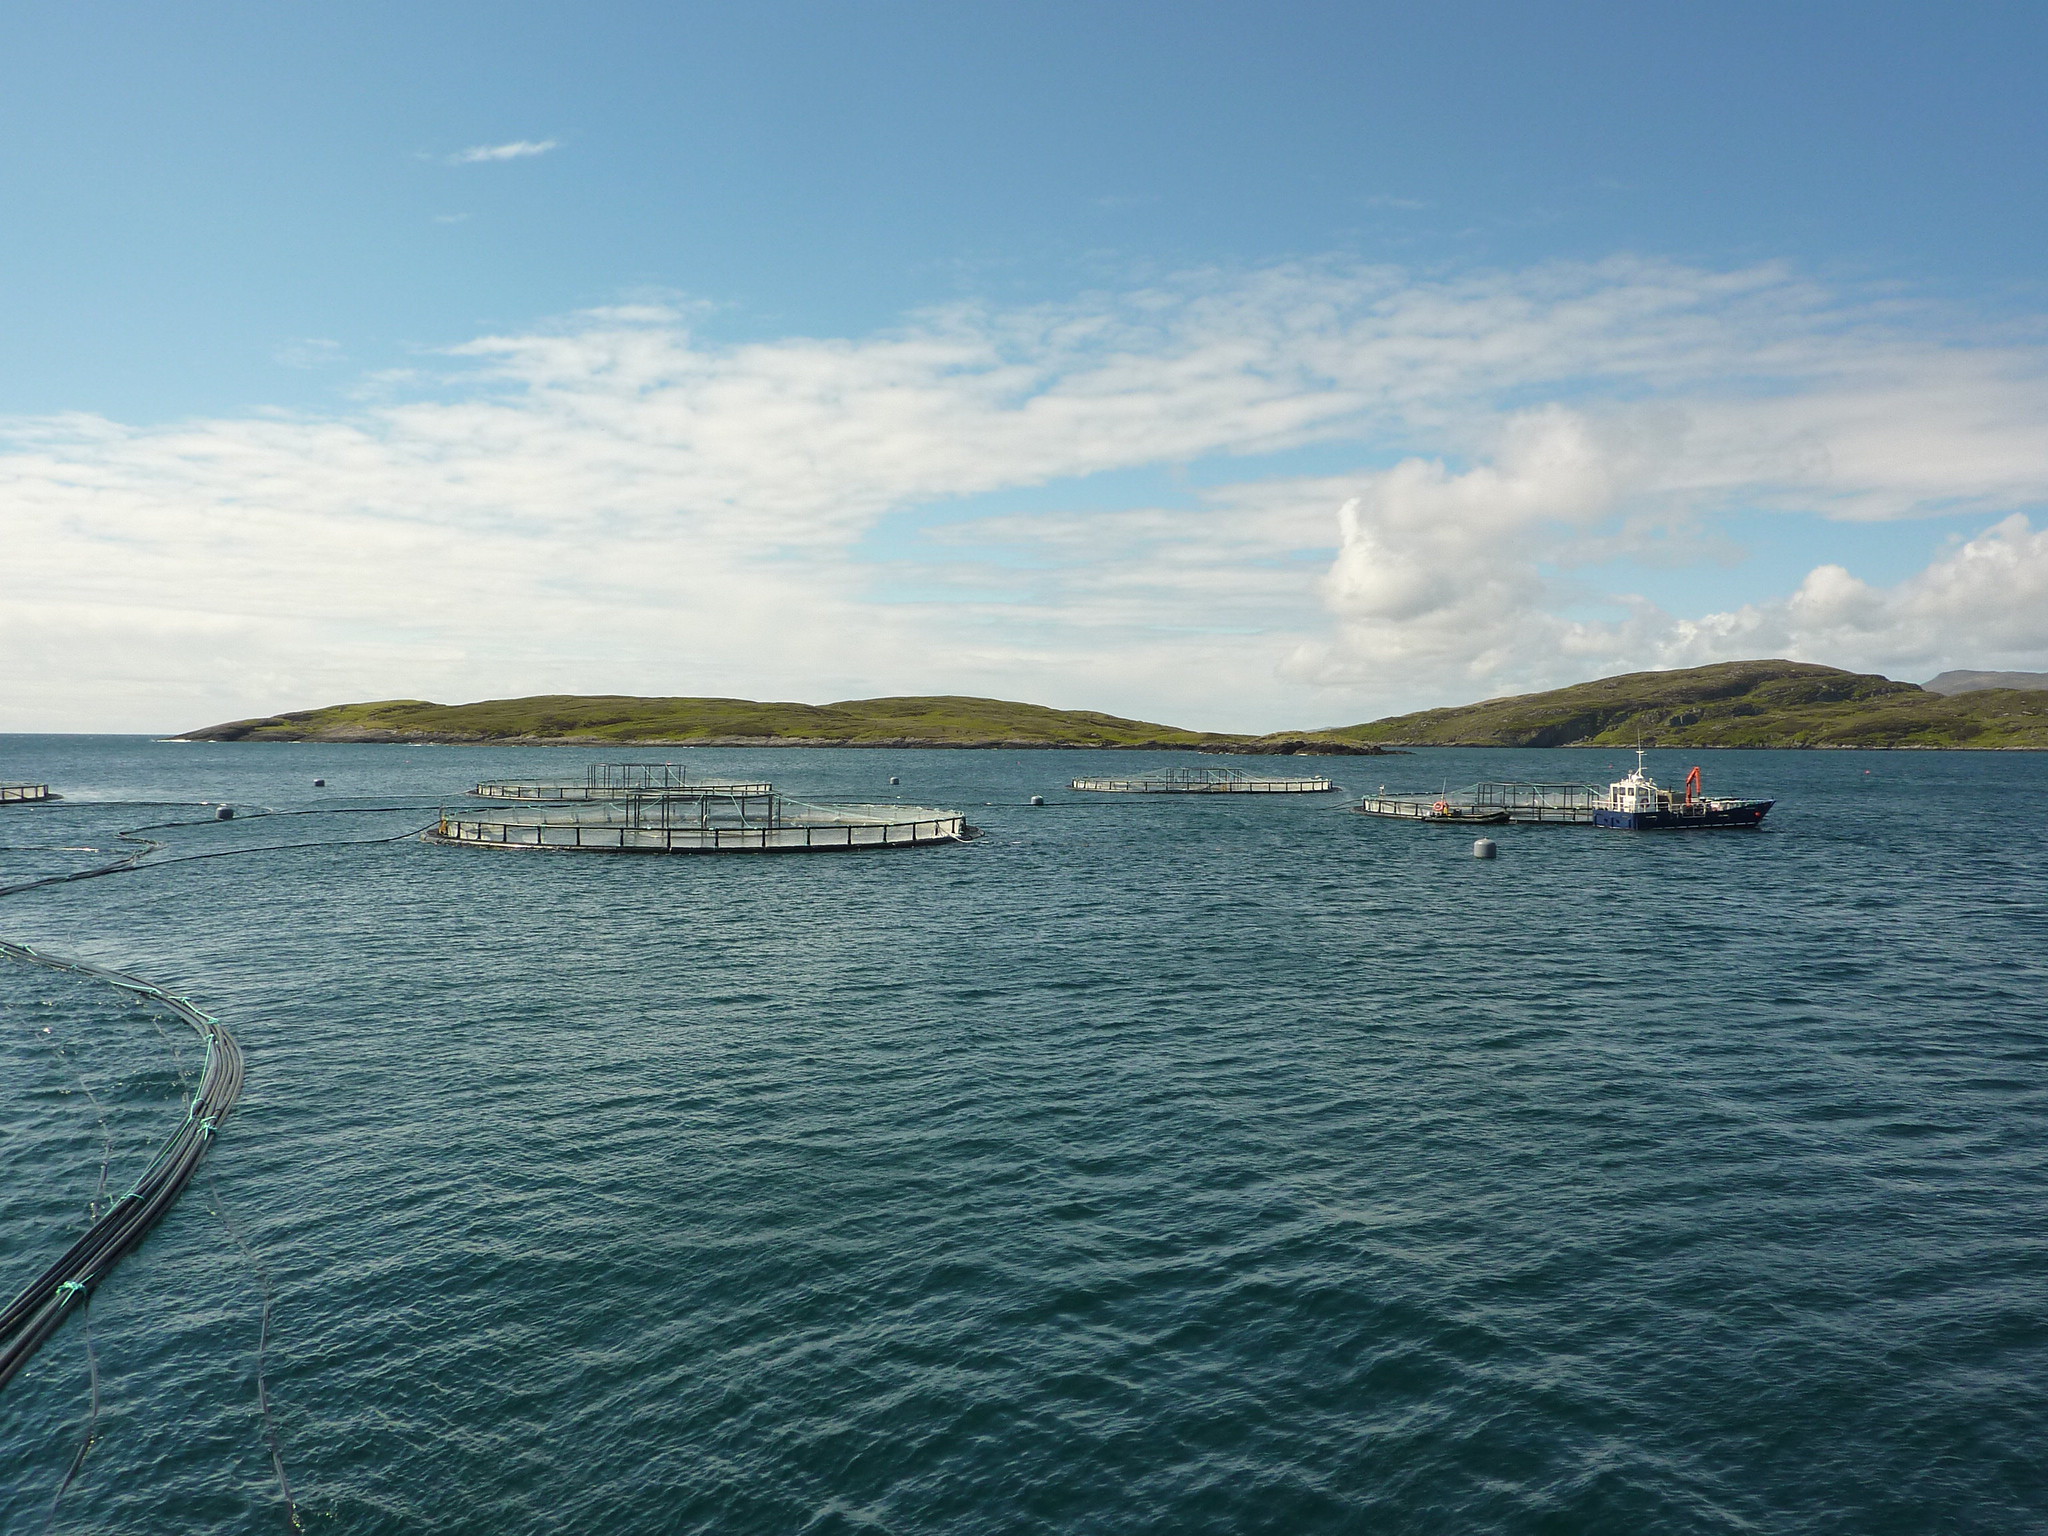 Hellisay fish farm in the Western Isles